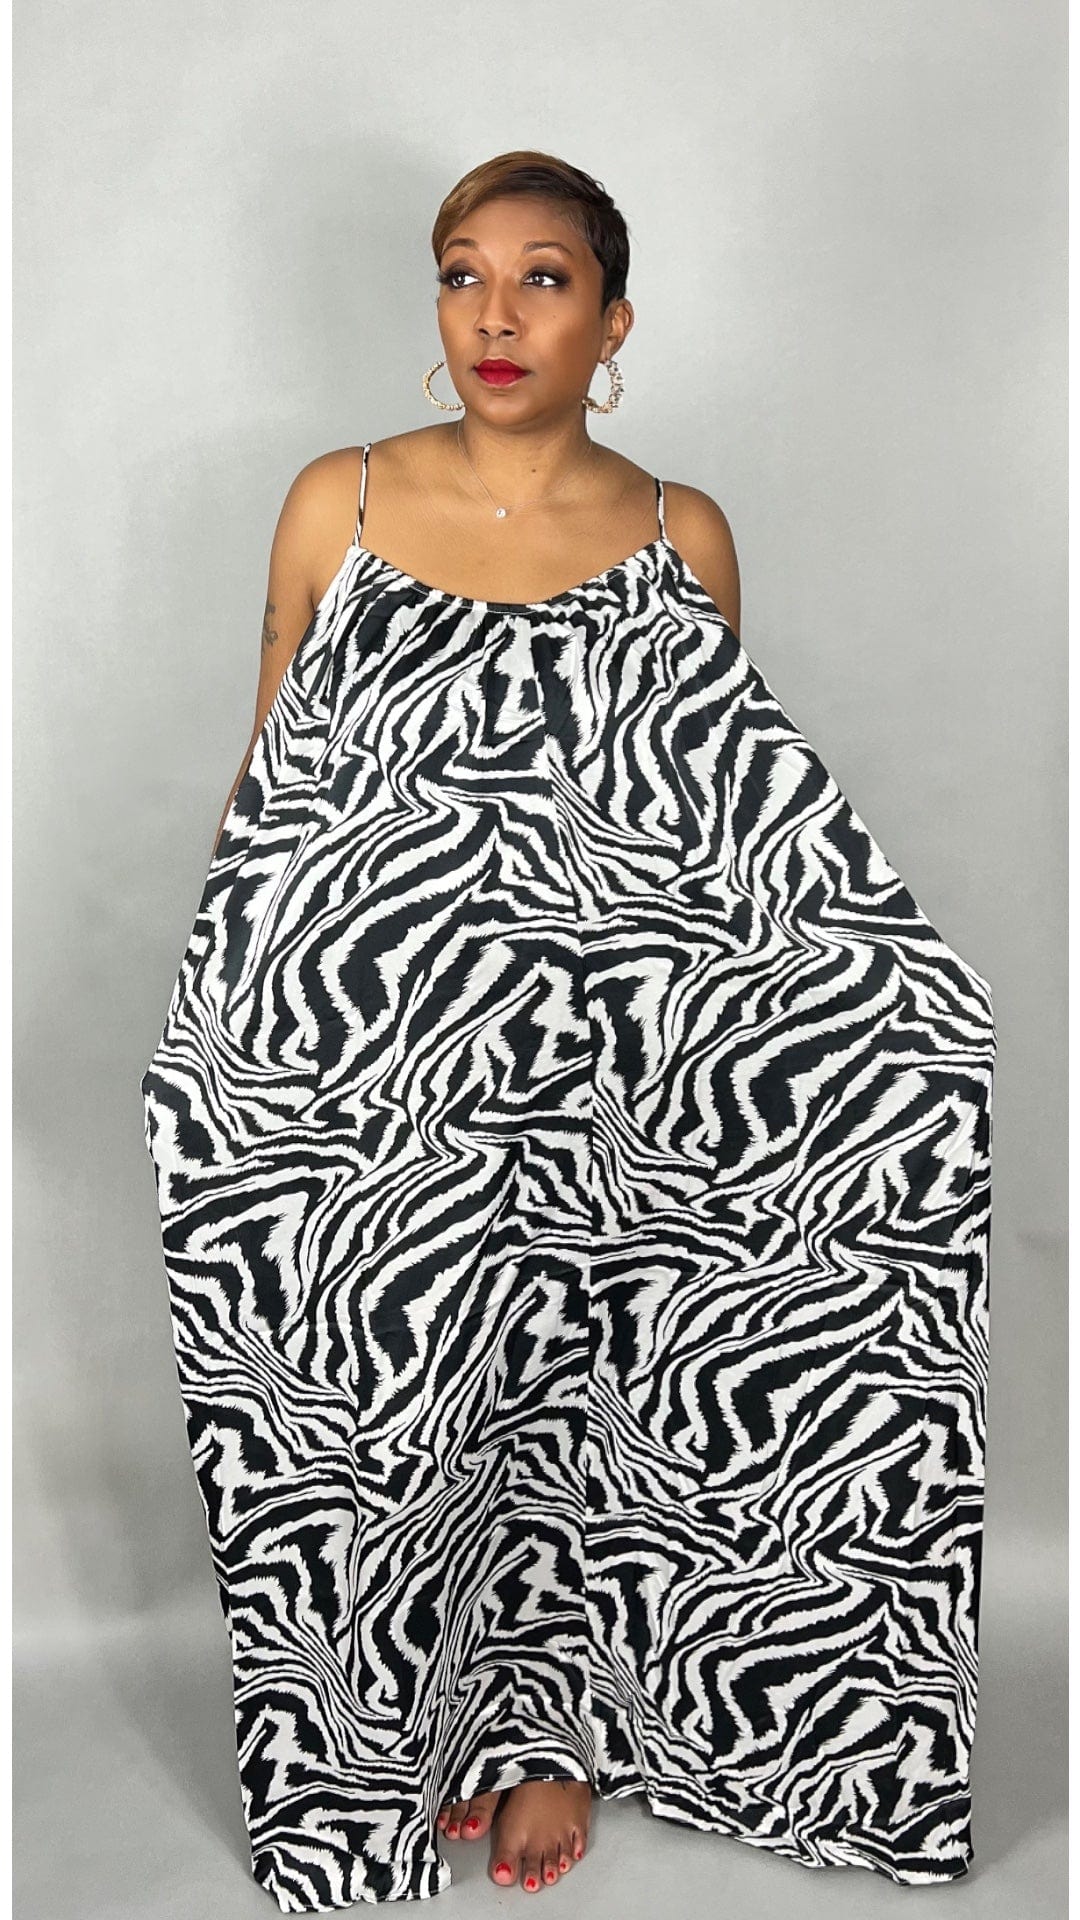 Zebra Print Dress - SwishHer